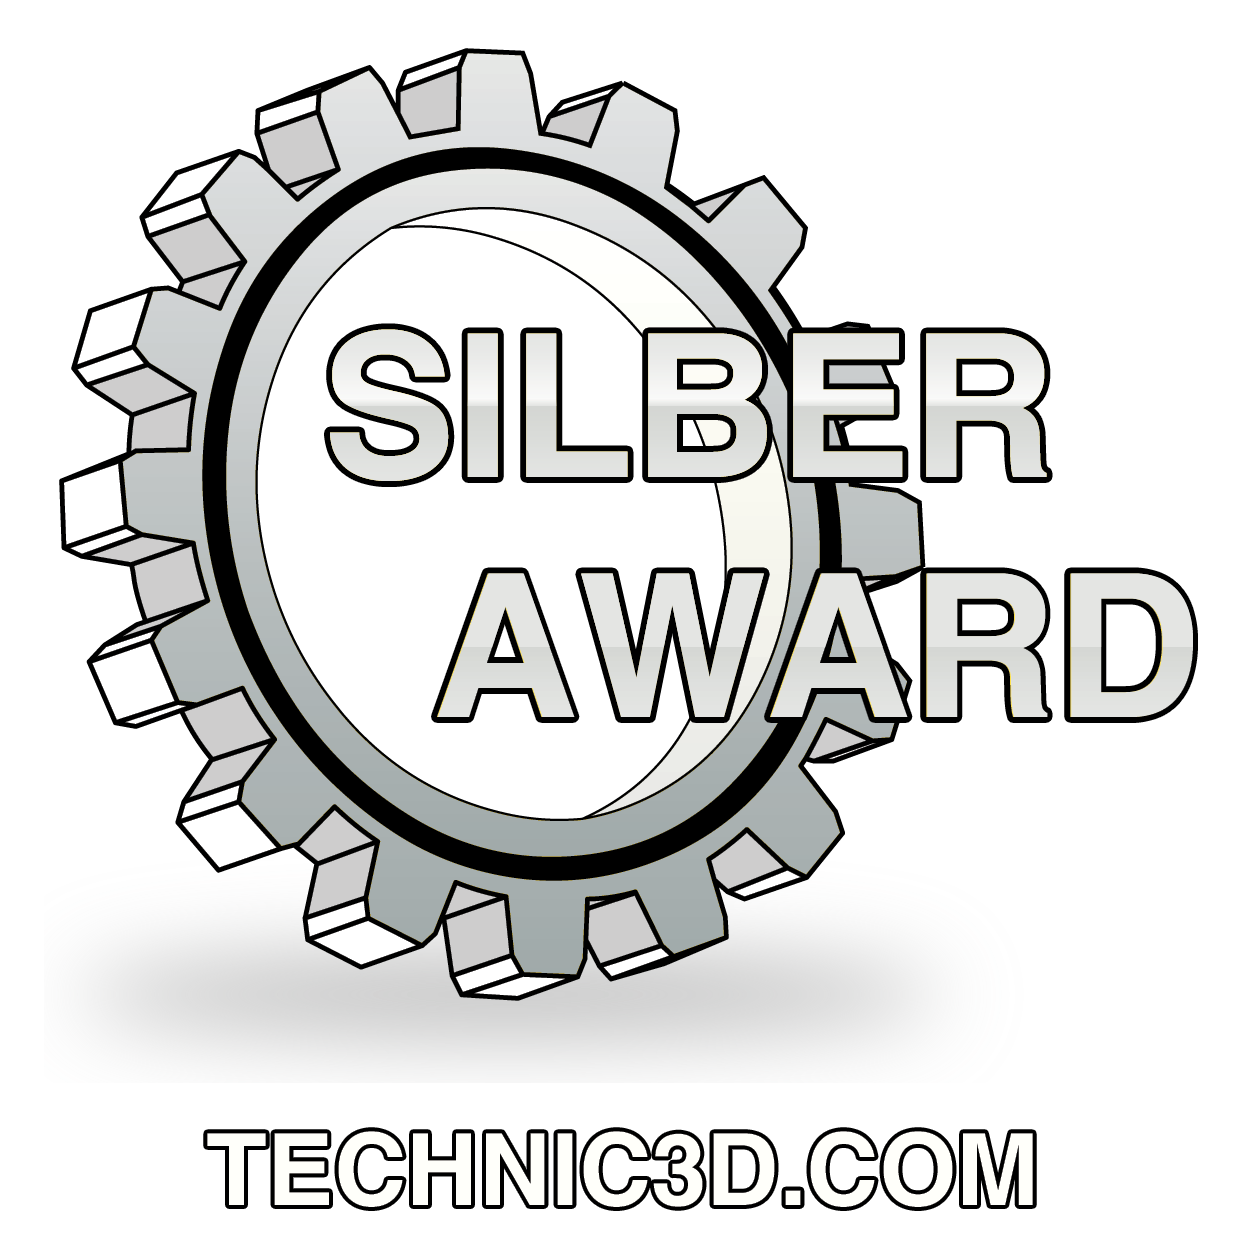 Technic3D: Silber Award